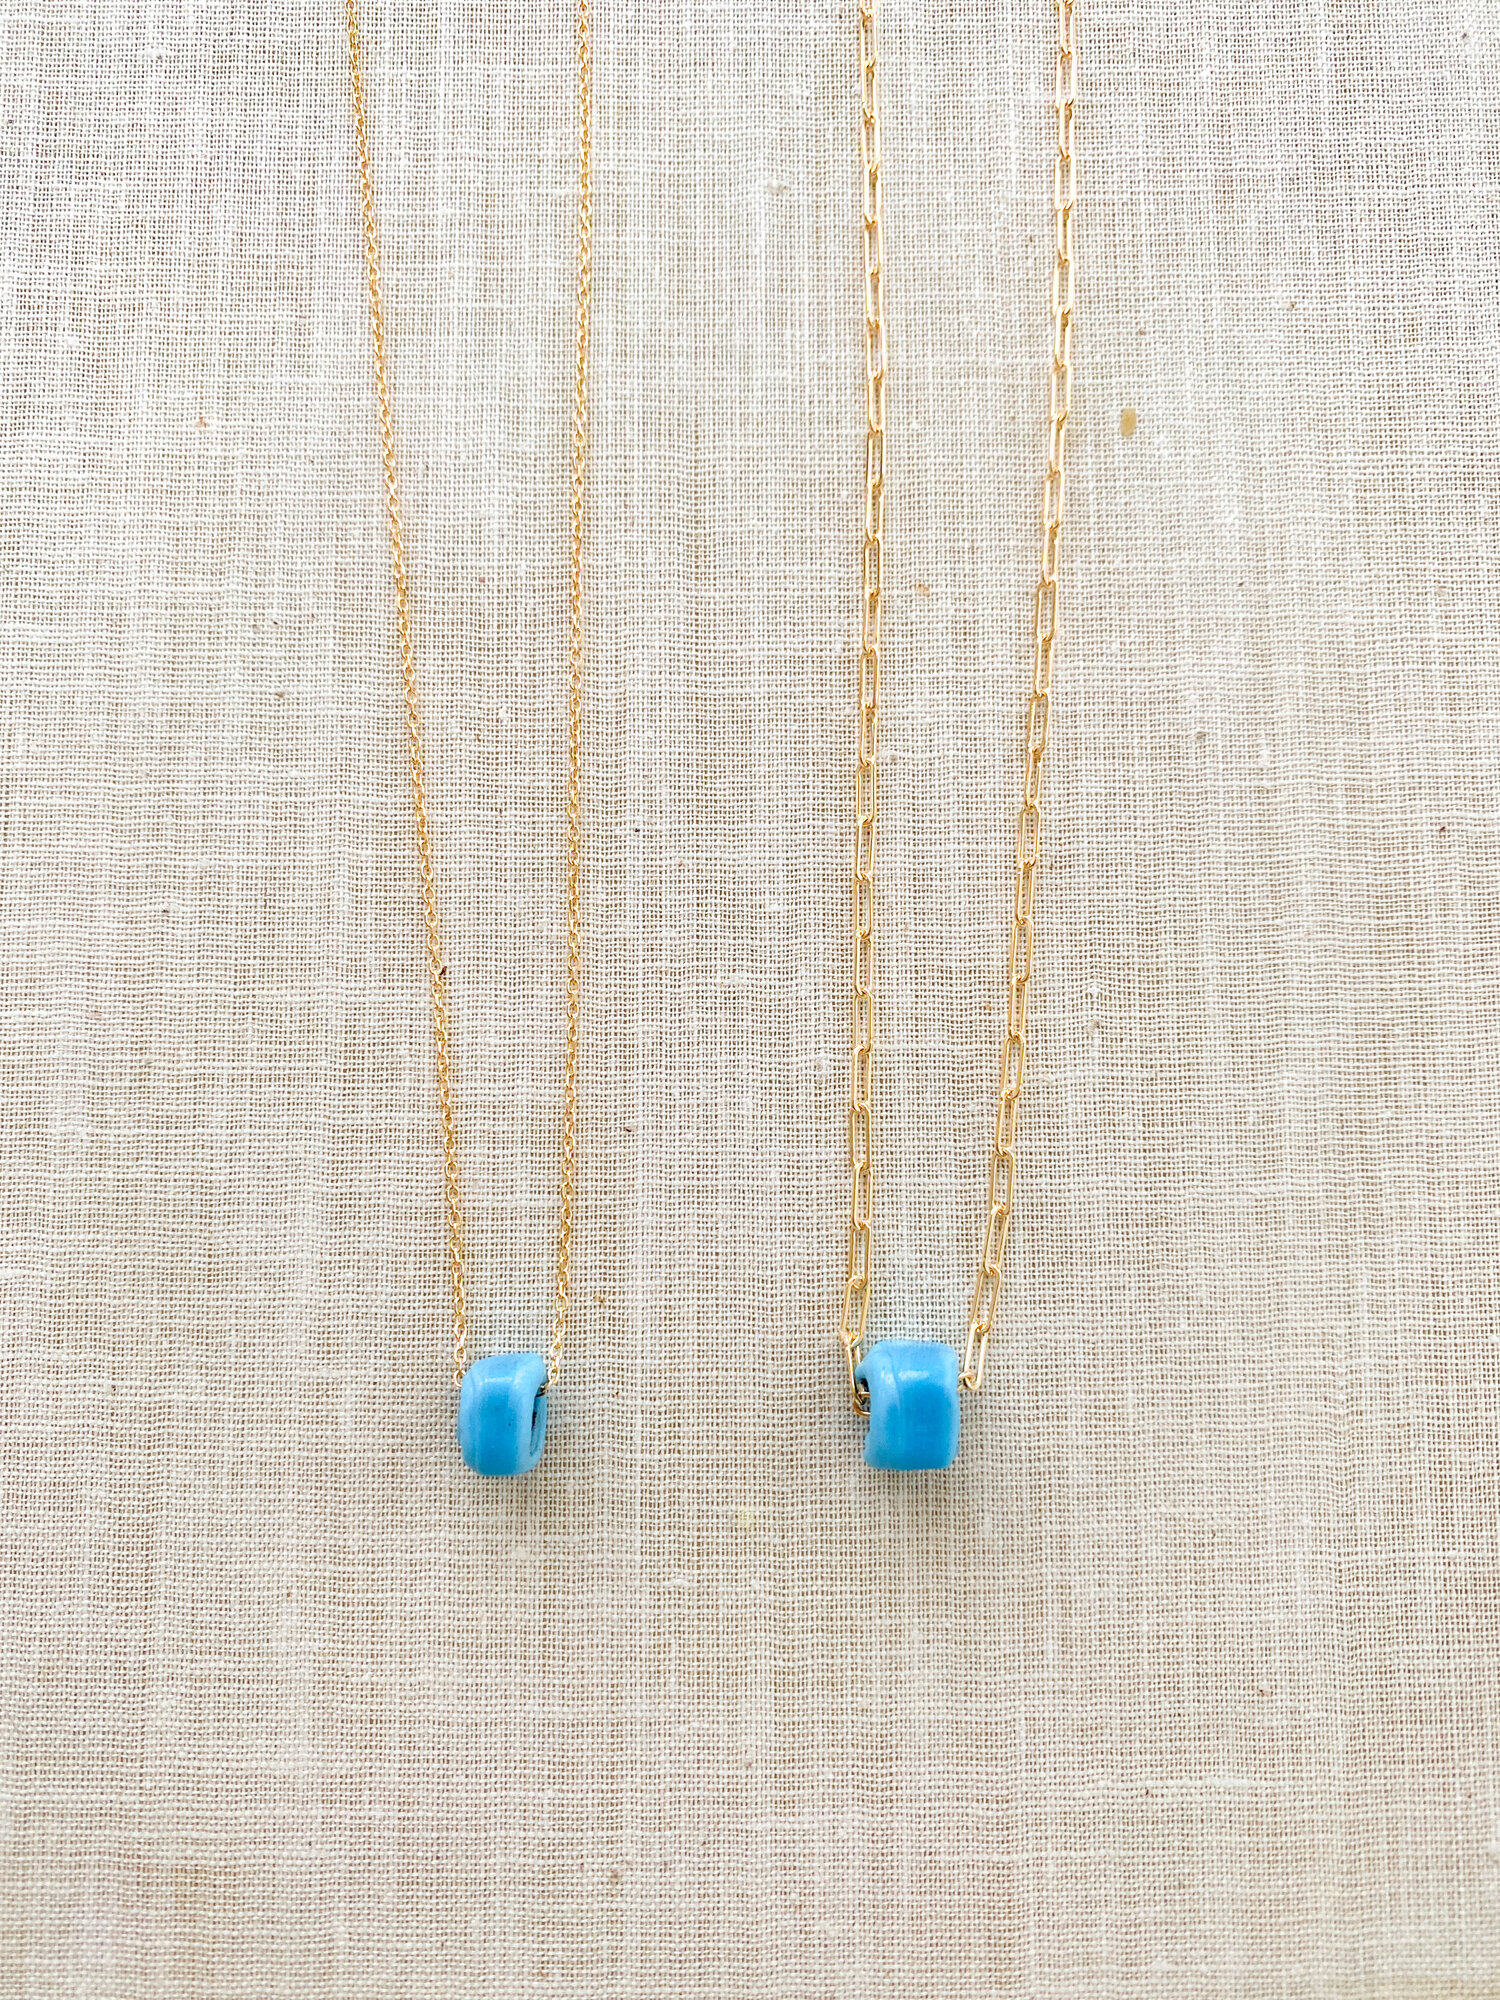 Greek Blue Beads 